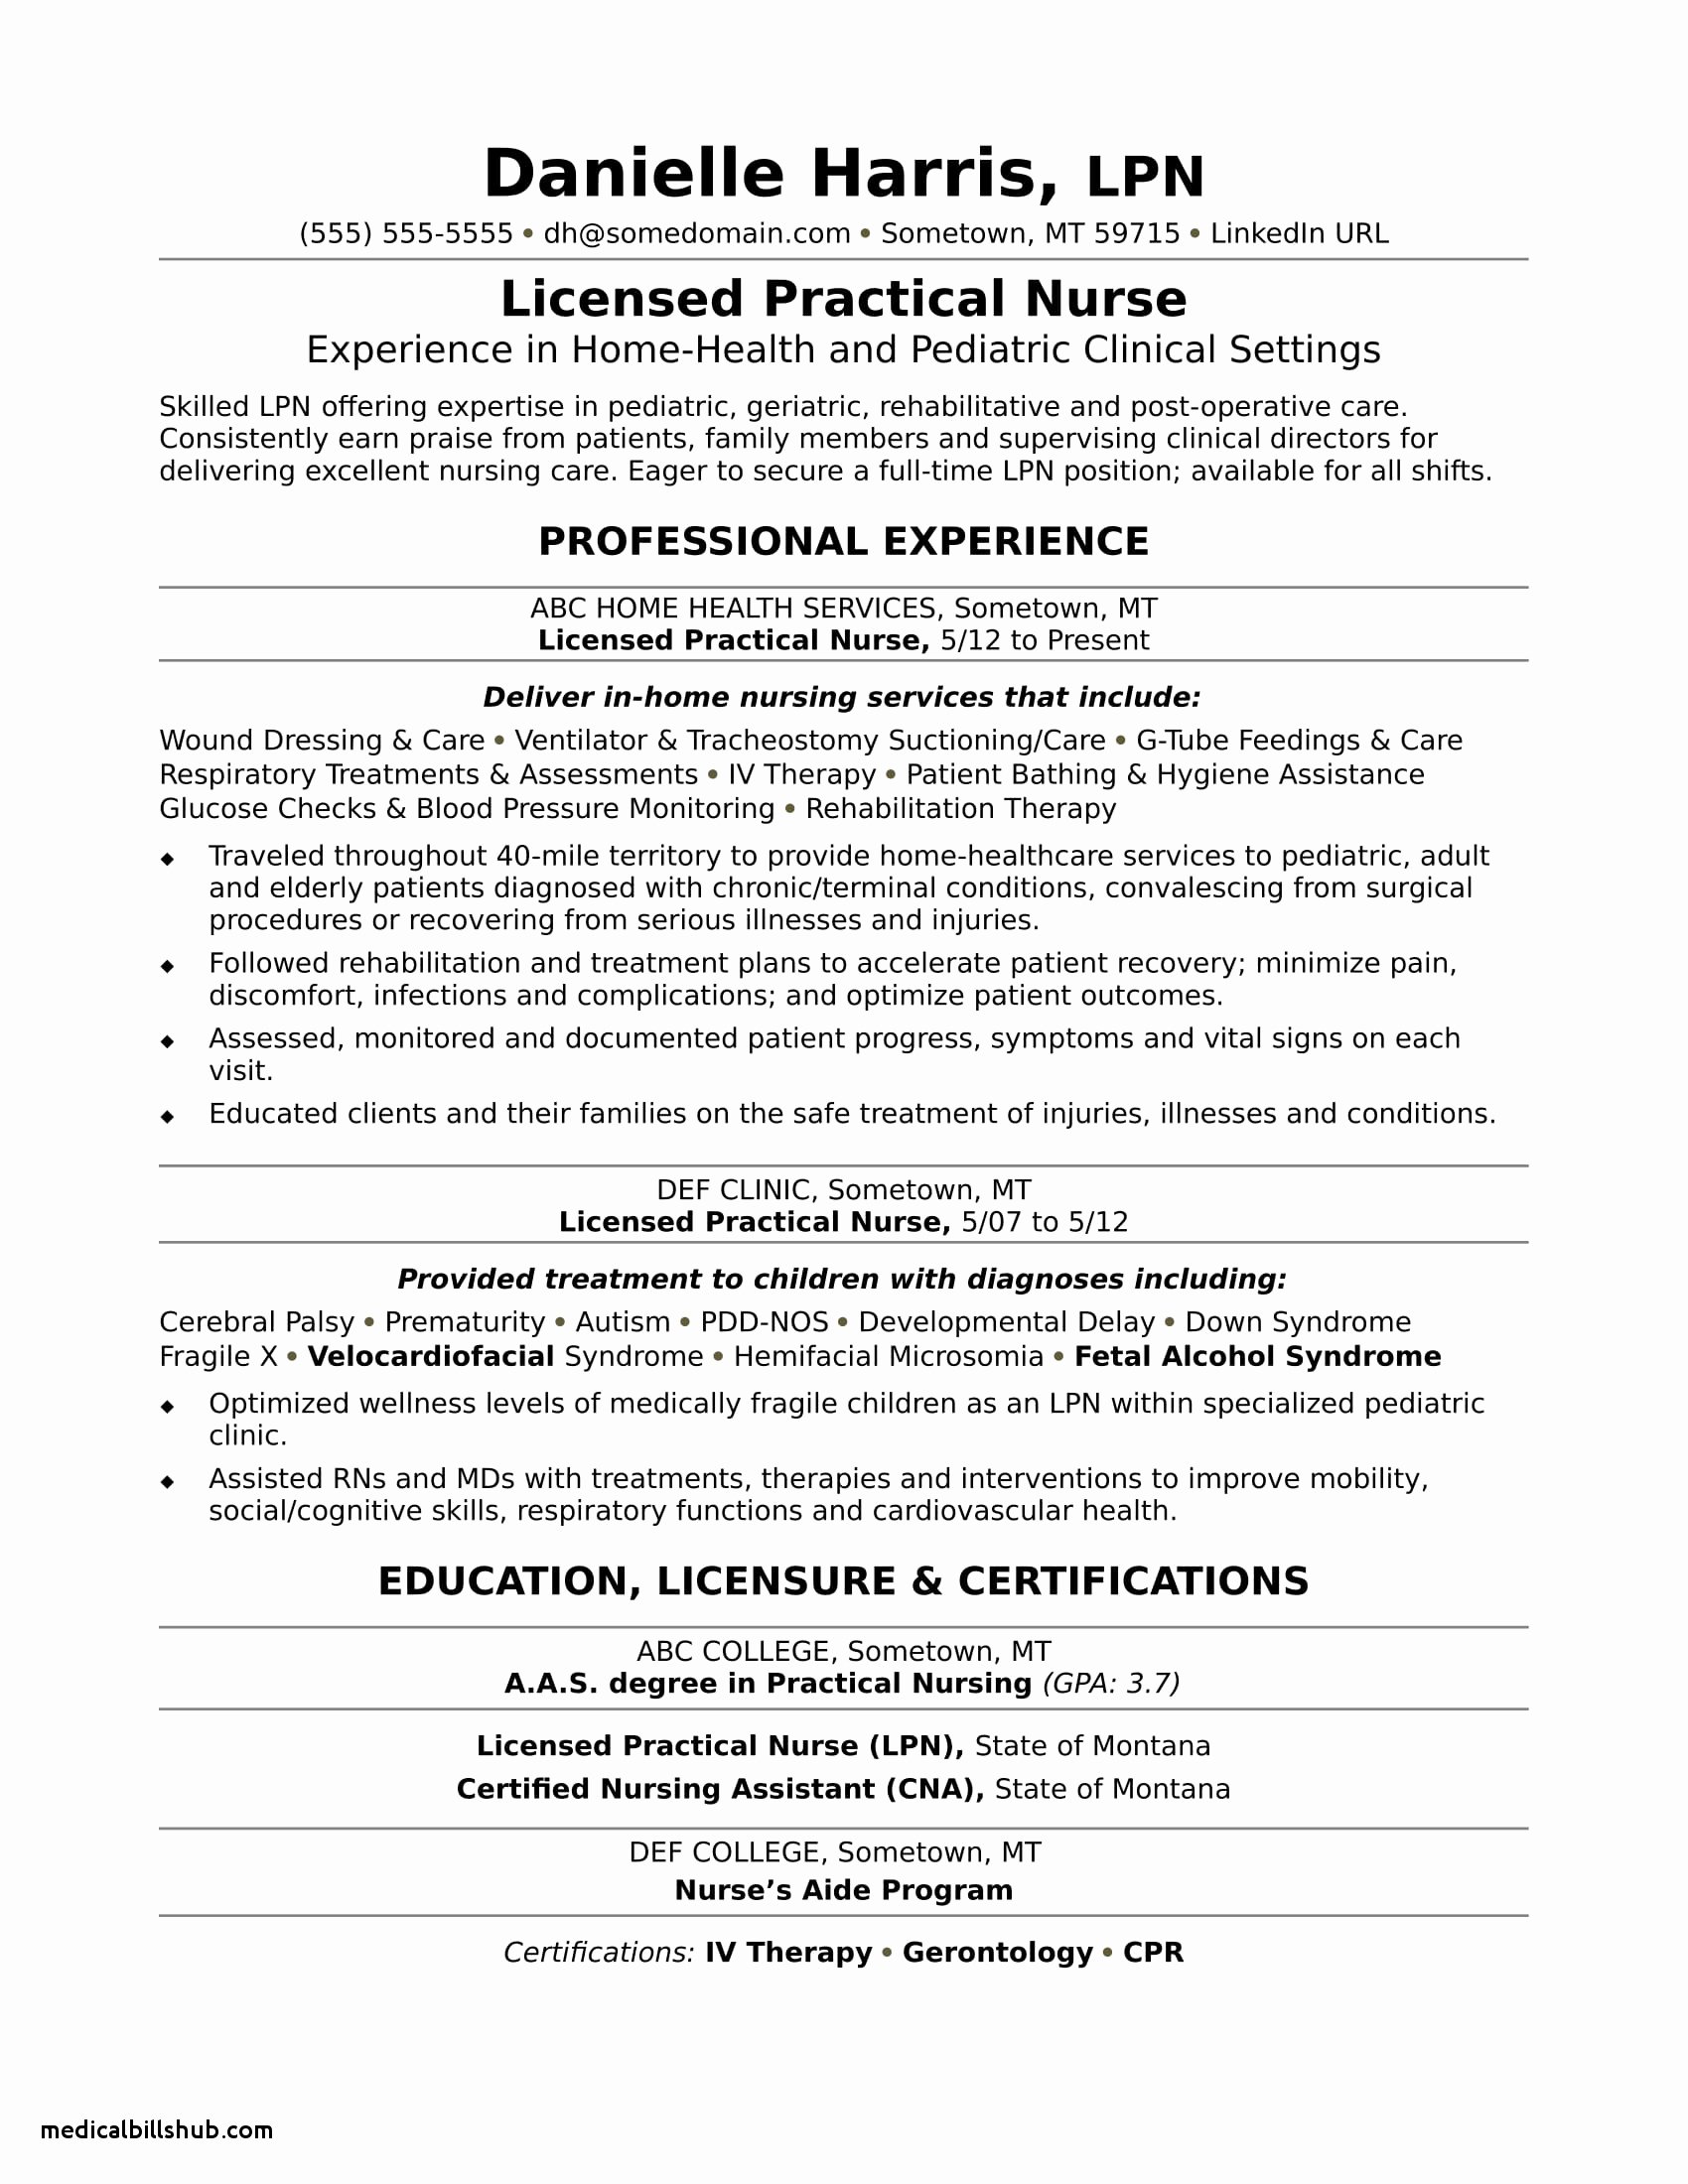 New Grad Nursing Resume Clinical Experience associates